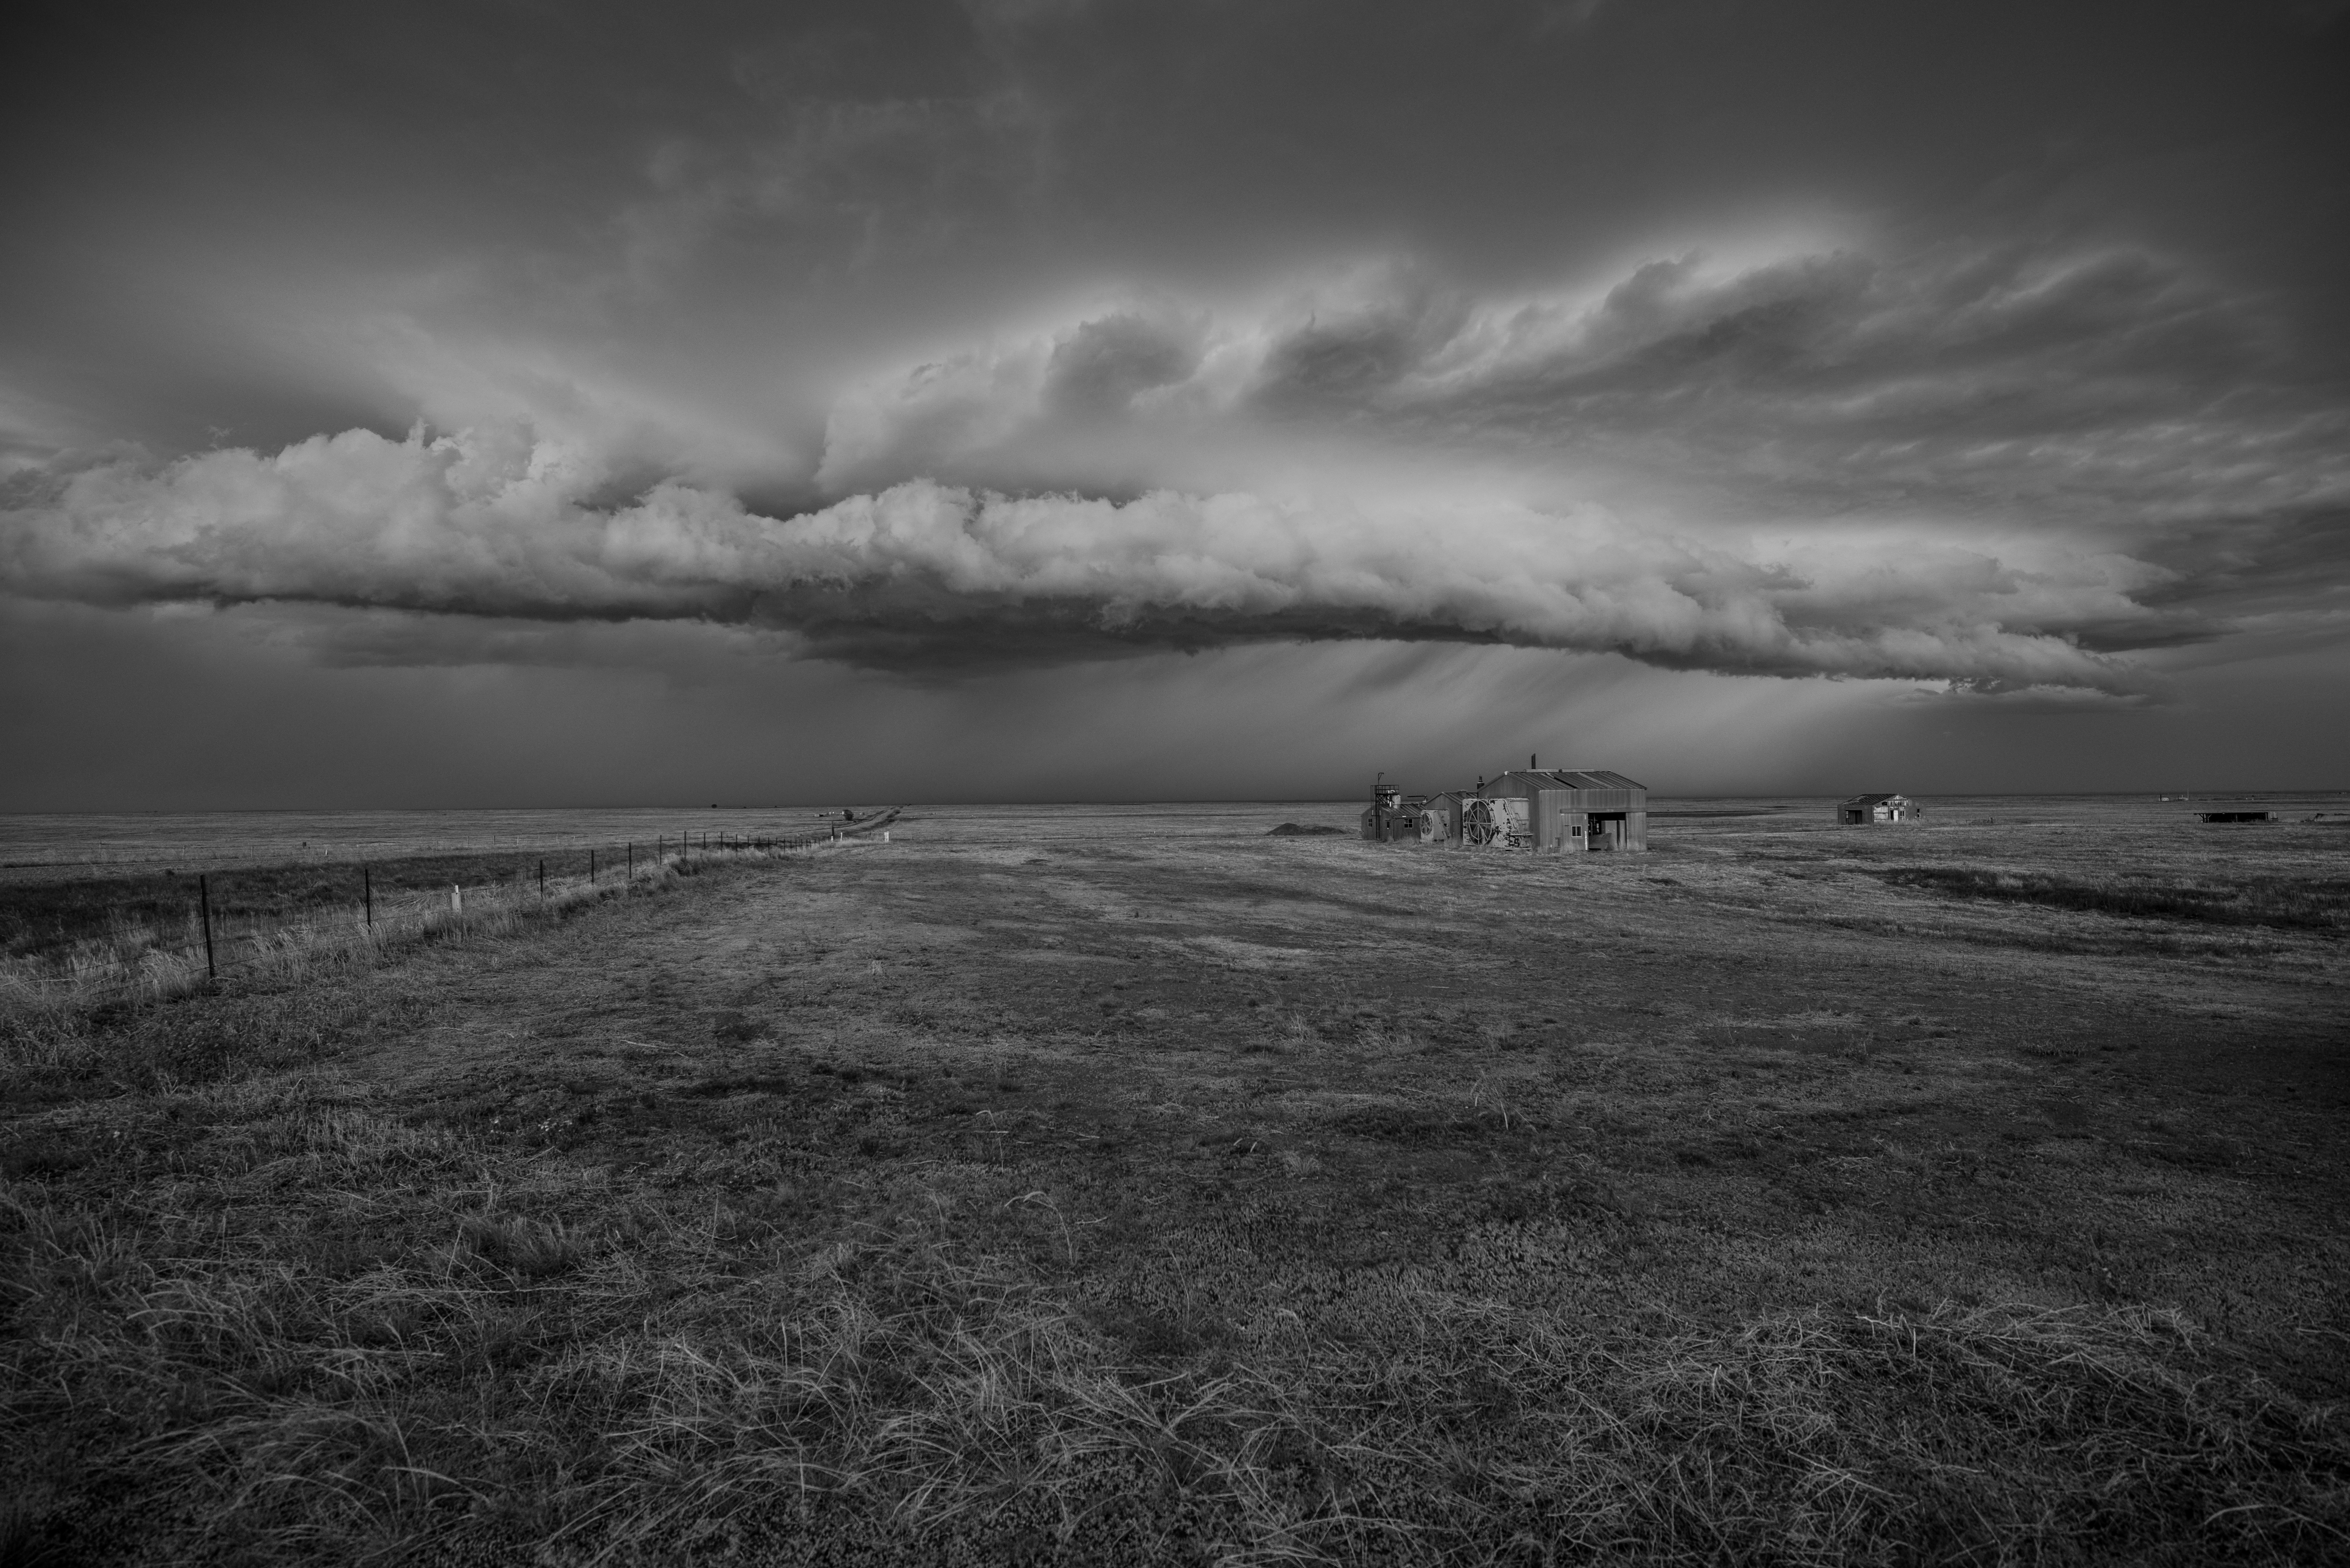 A storm in Alberta